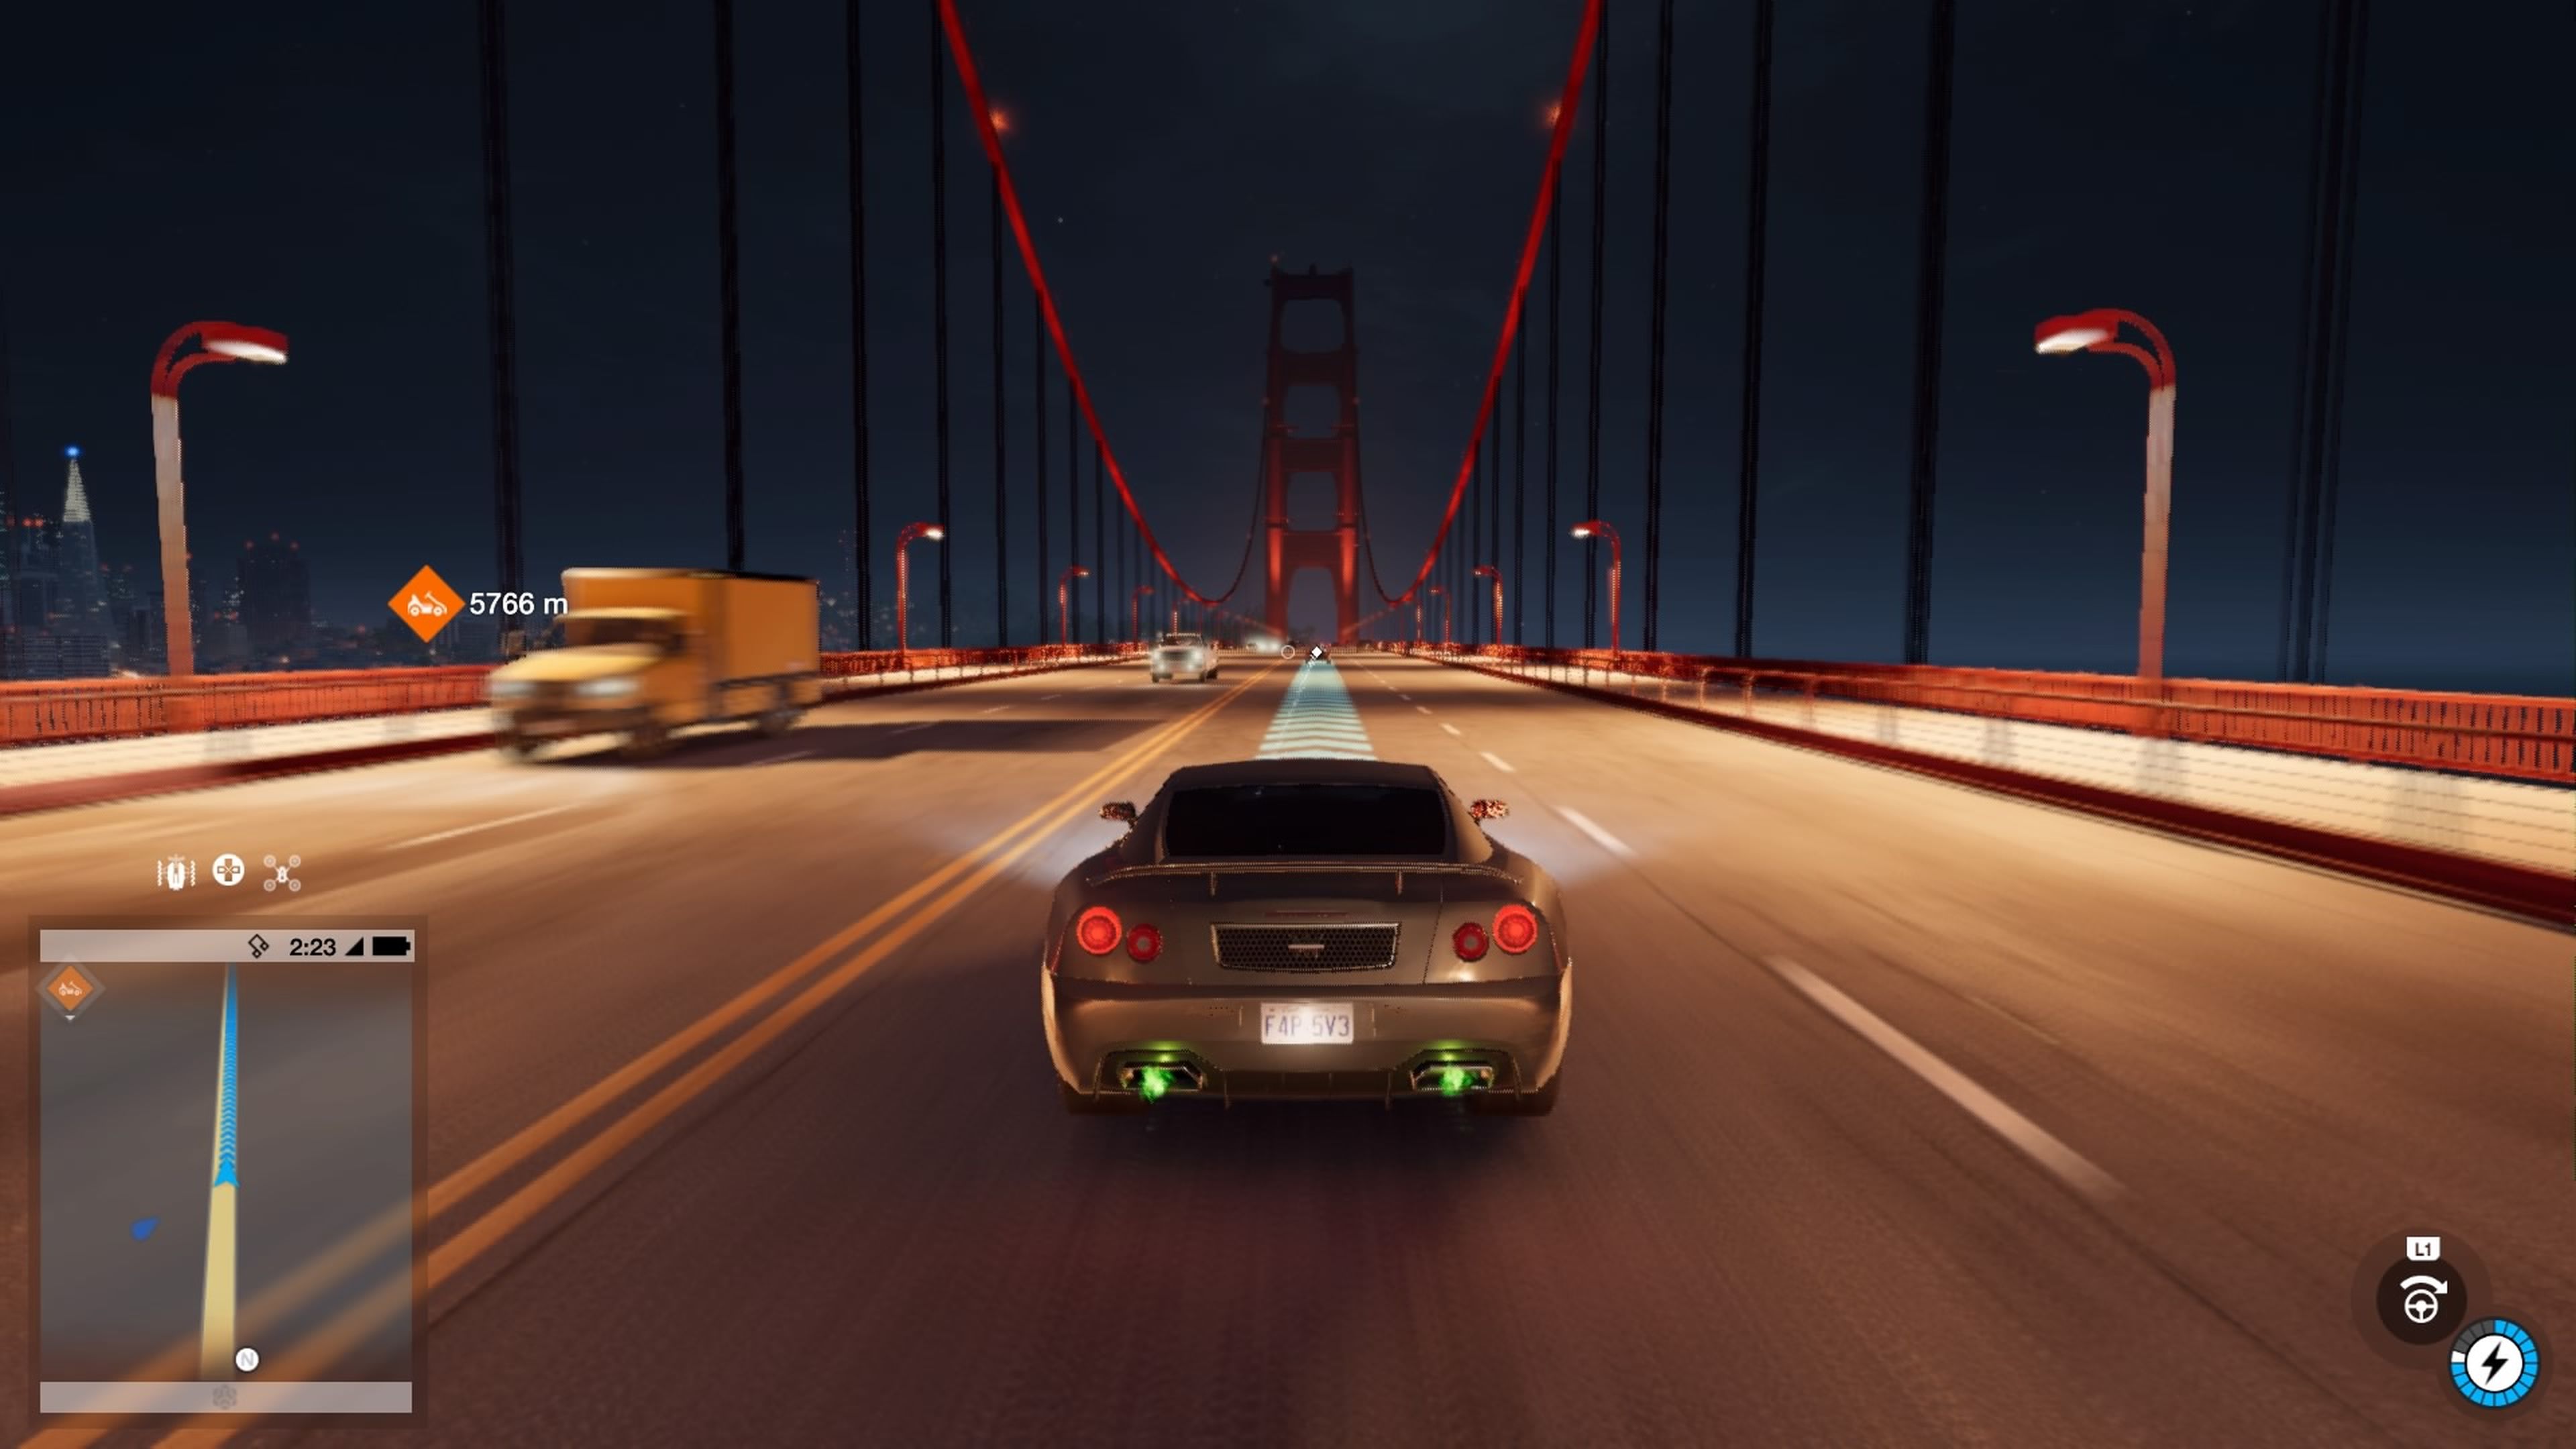 El Golden Gate da pie a pisar el acelerador.